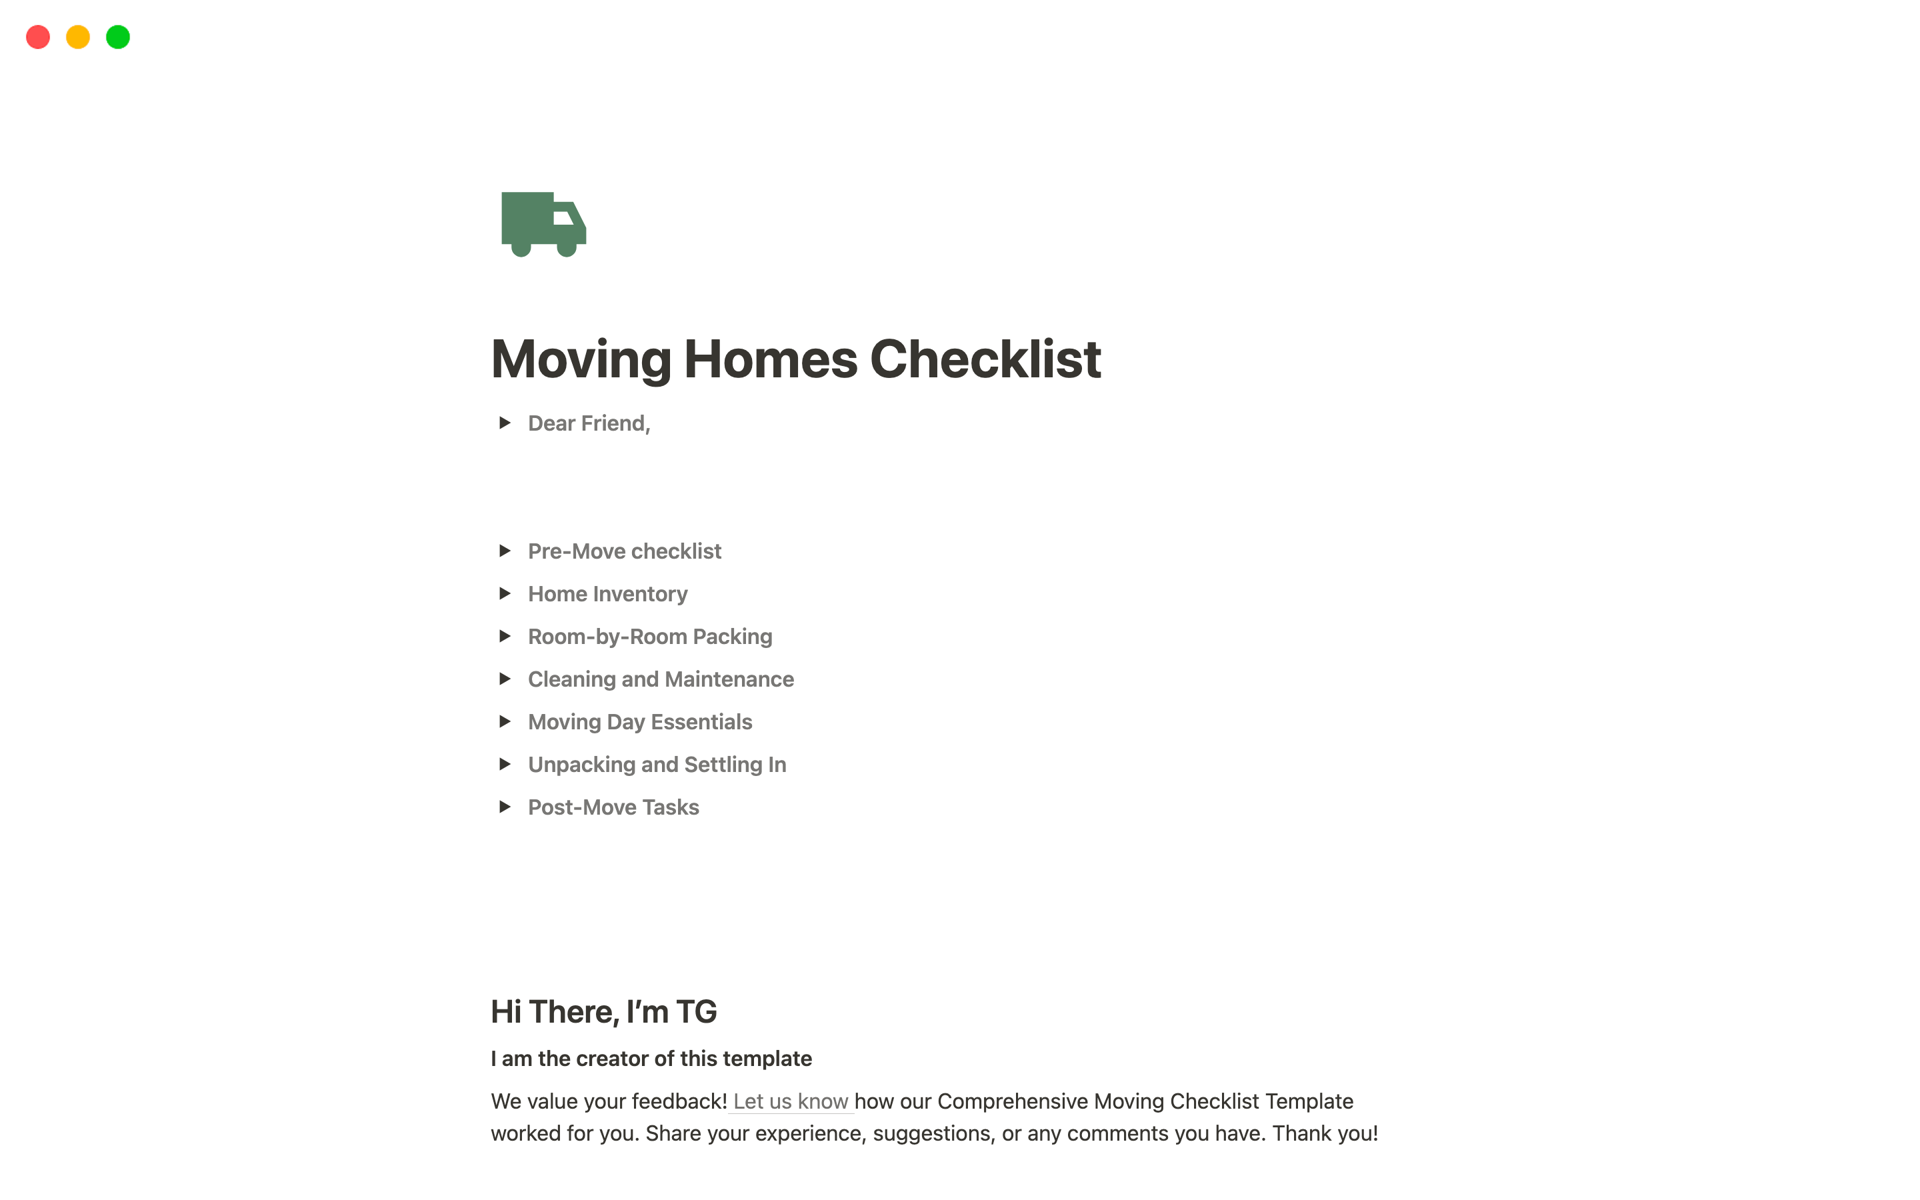 Vista previa de plantilla para Moving Homes Checklist